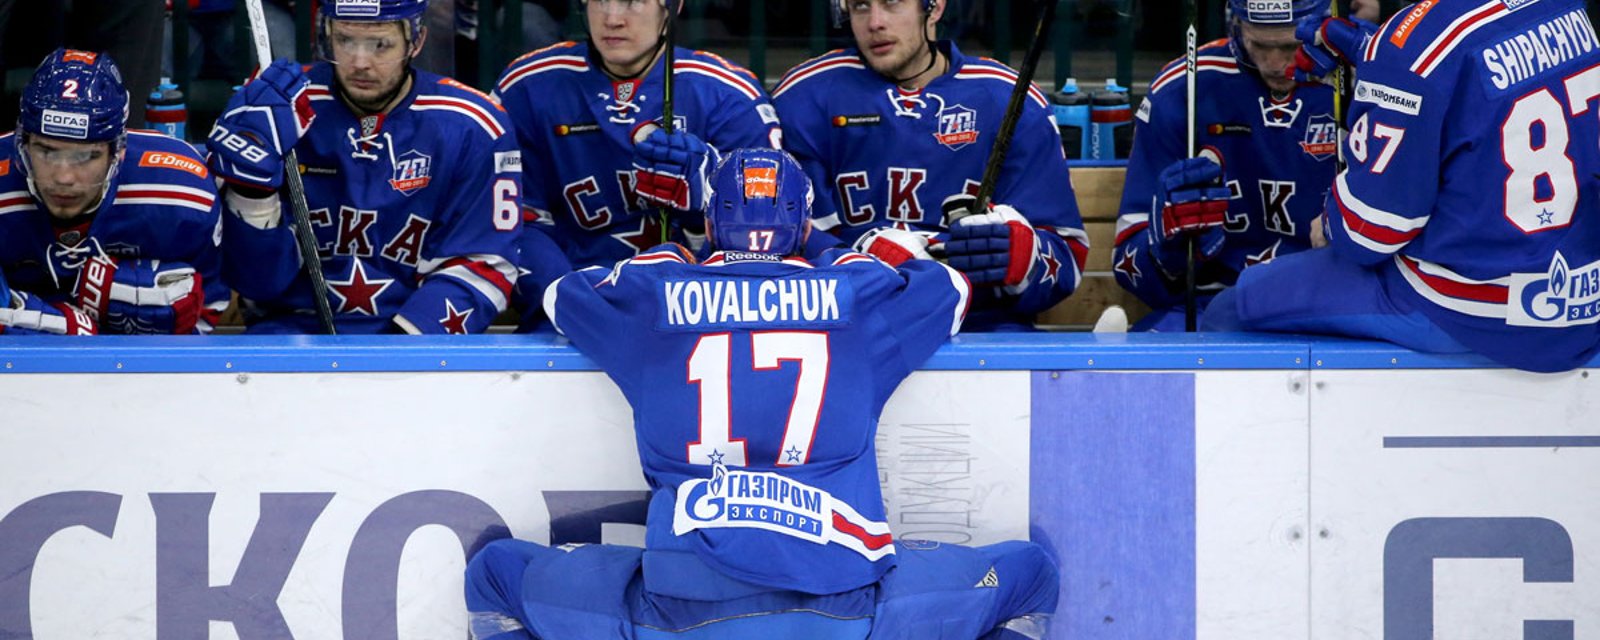 Rumeur: Ilya Kovalchuk aurait signé à rabais en Russie!